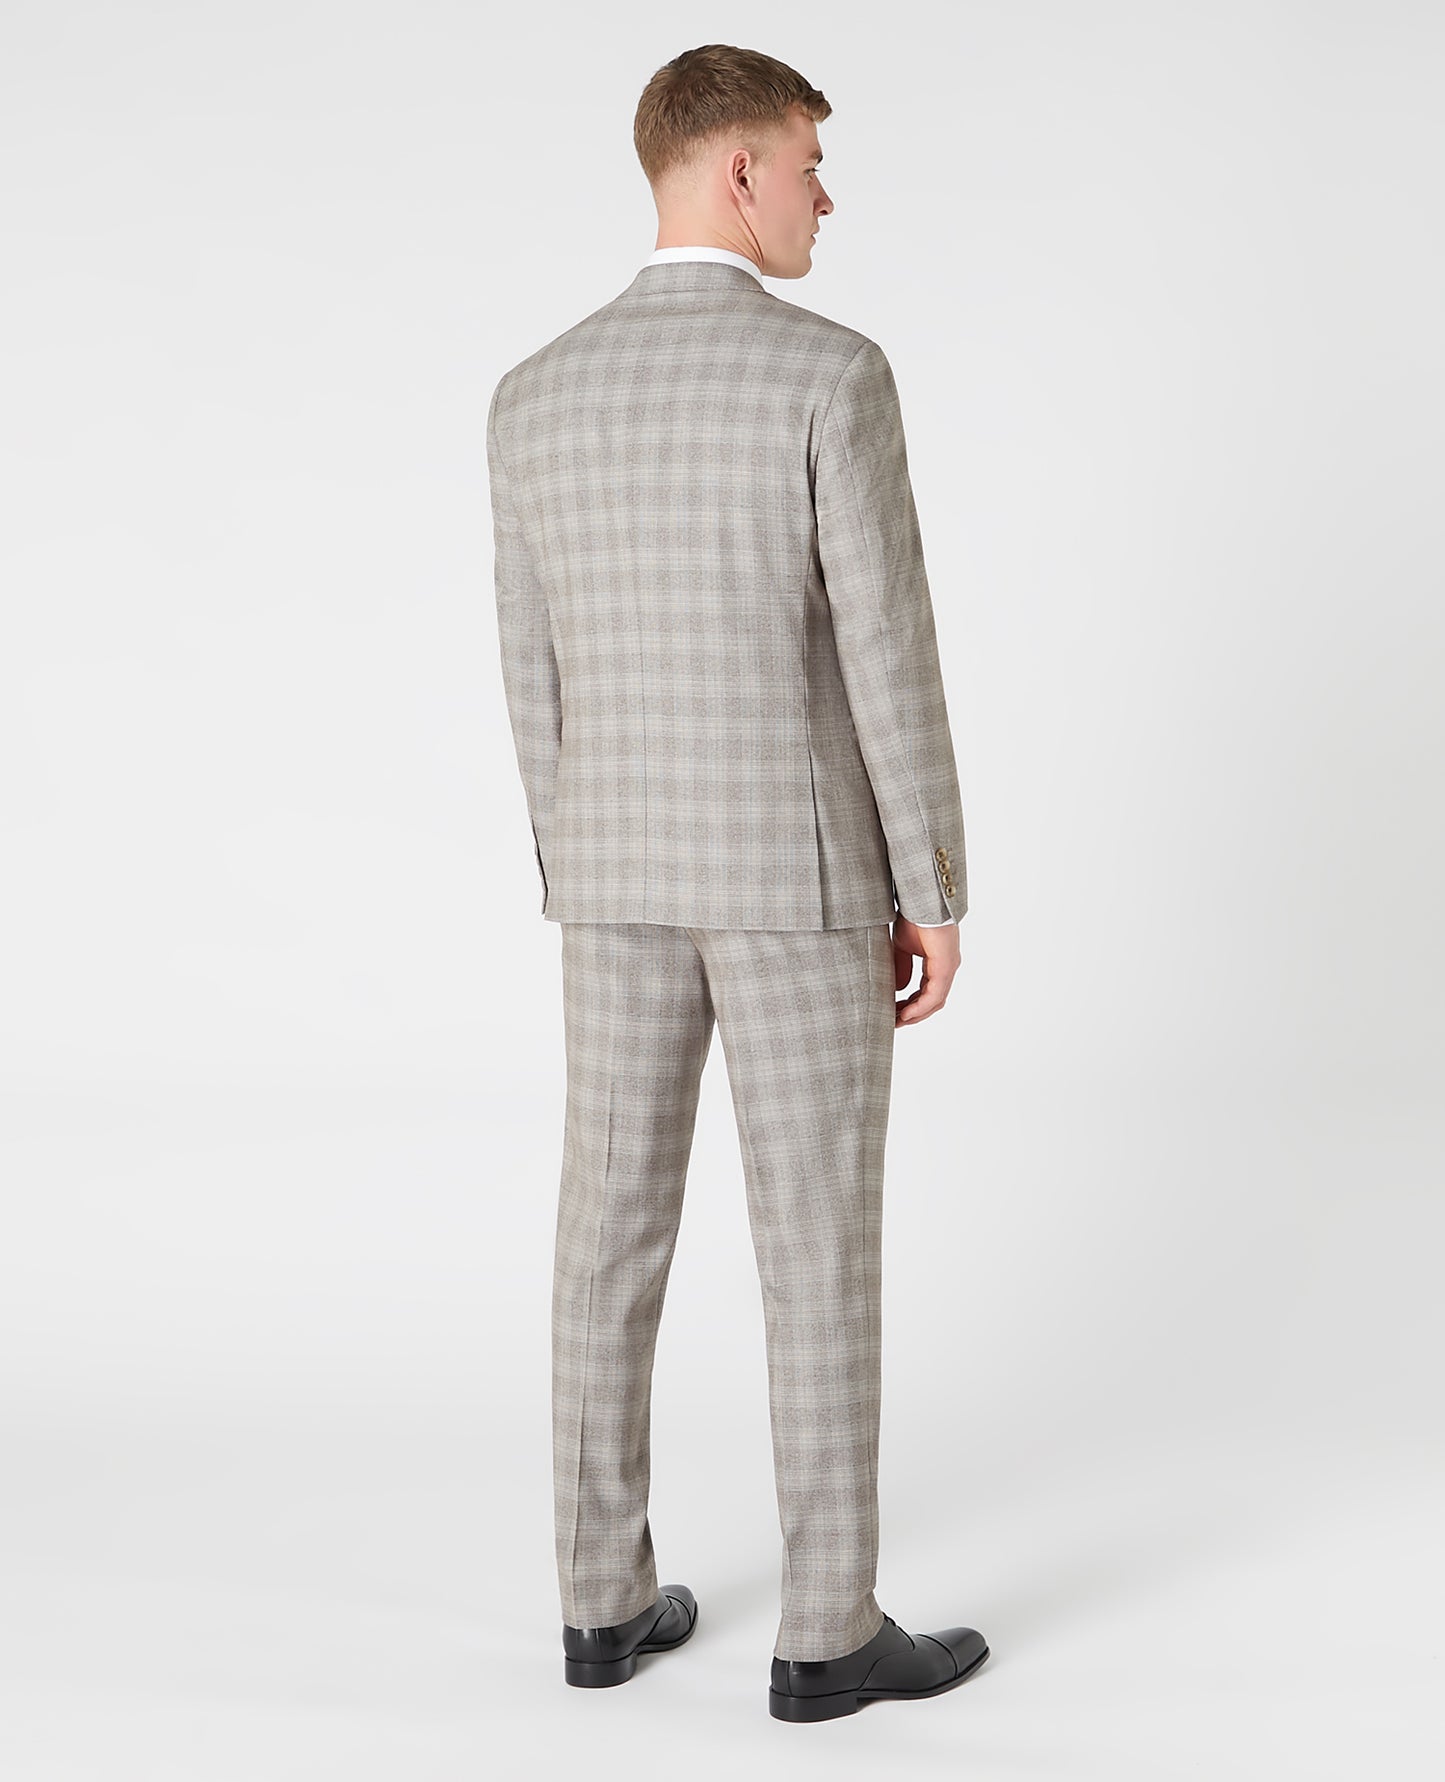 X-Slim Fit Stone Overcheck 2-Piece Nested Suit